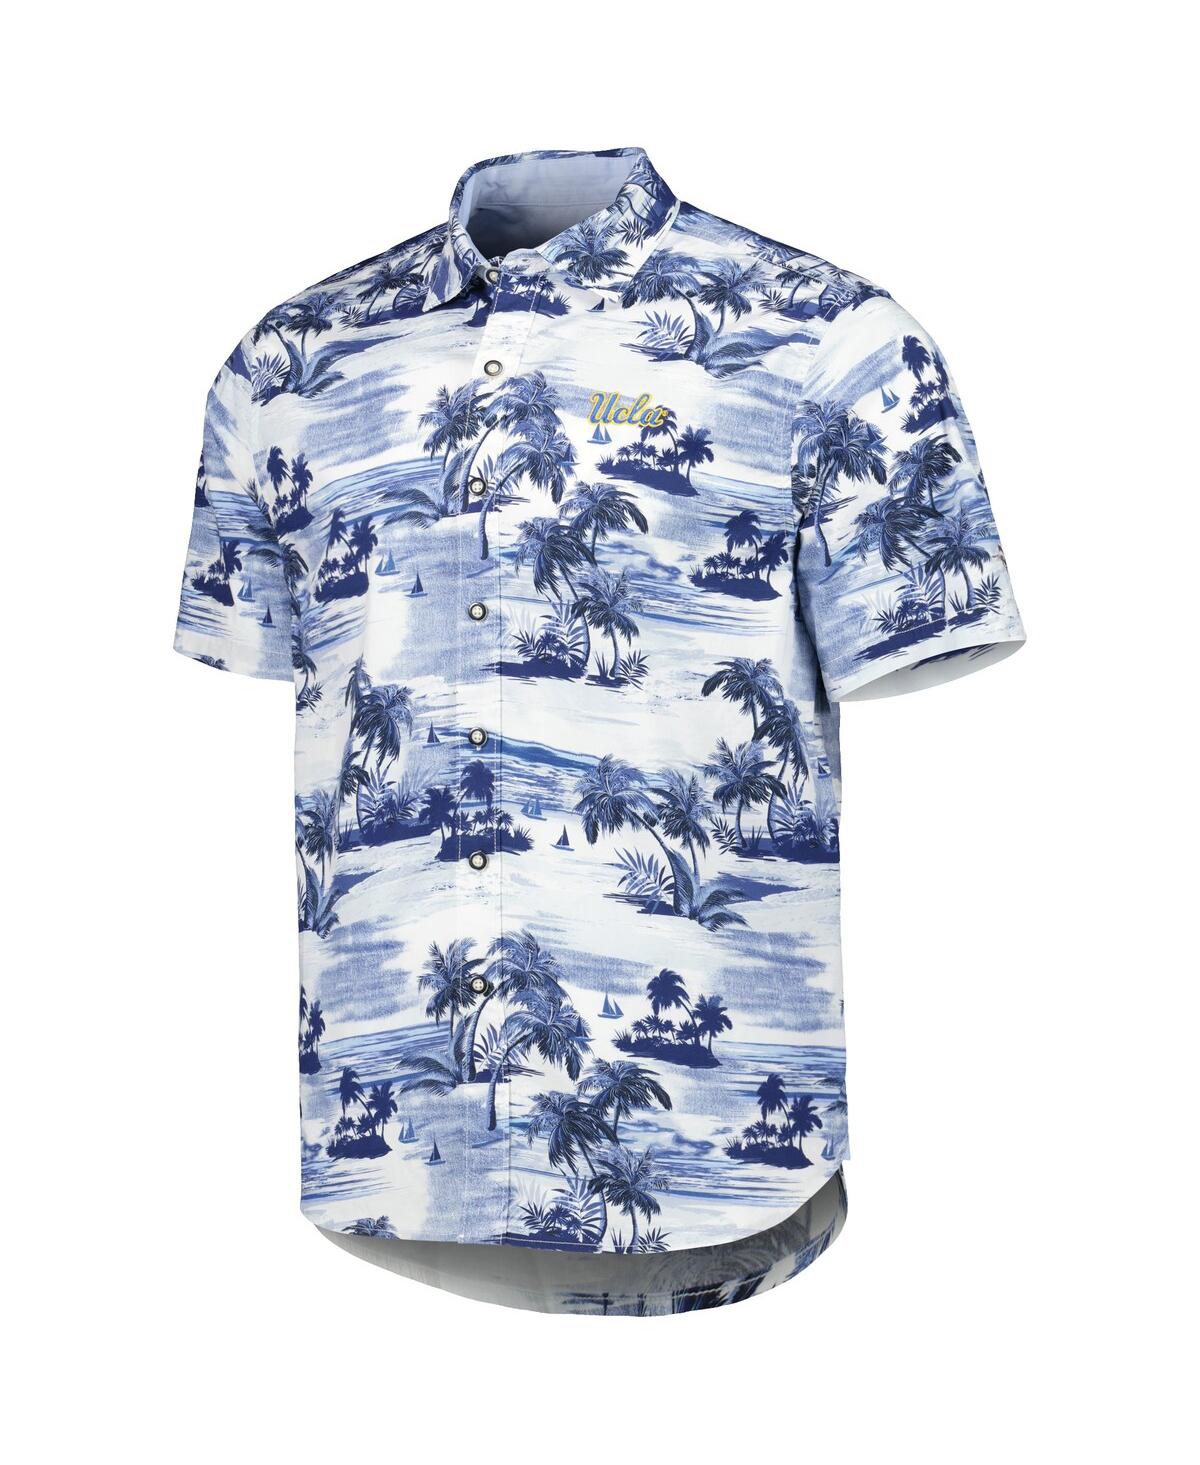 Men's New York Mets Tommy Bahama Navy Baseball Bay Button-Up Shirt